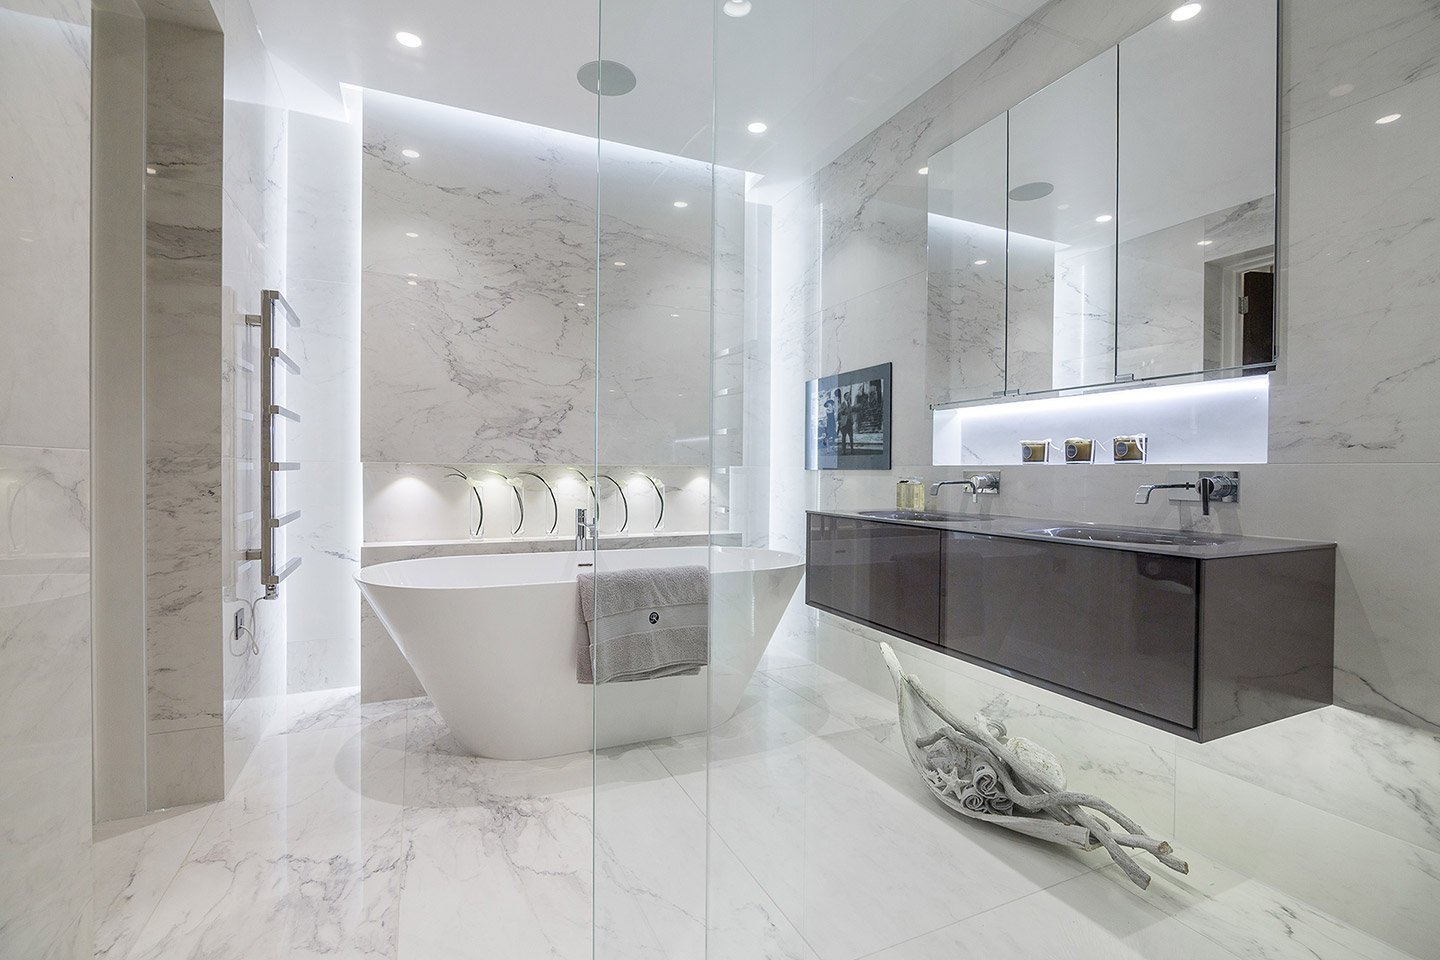 Luxurious Bathroom Design